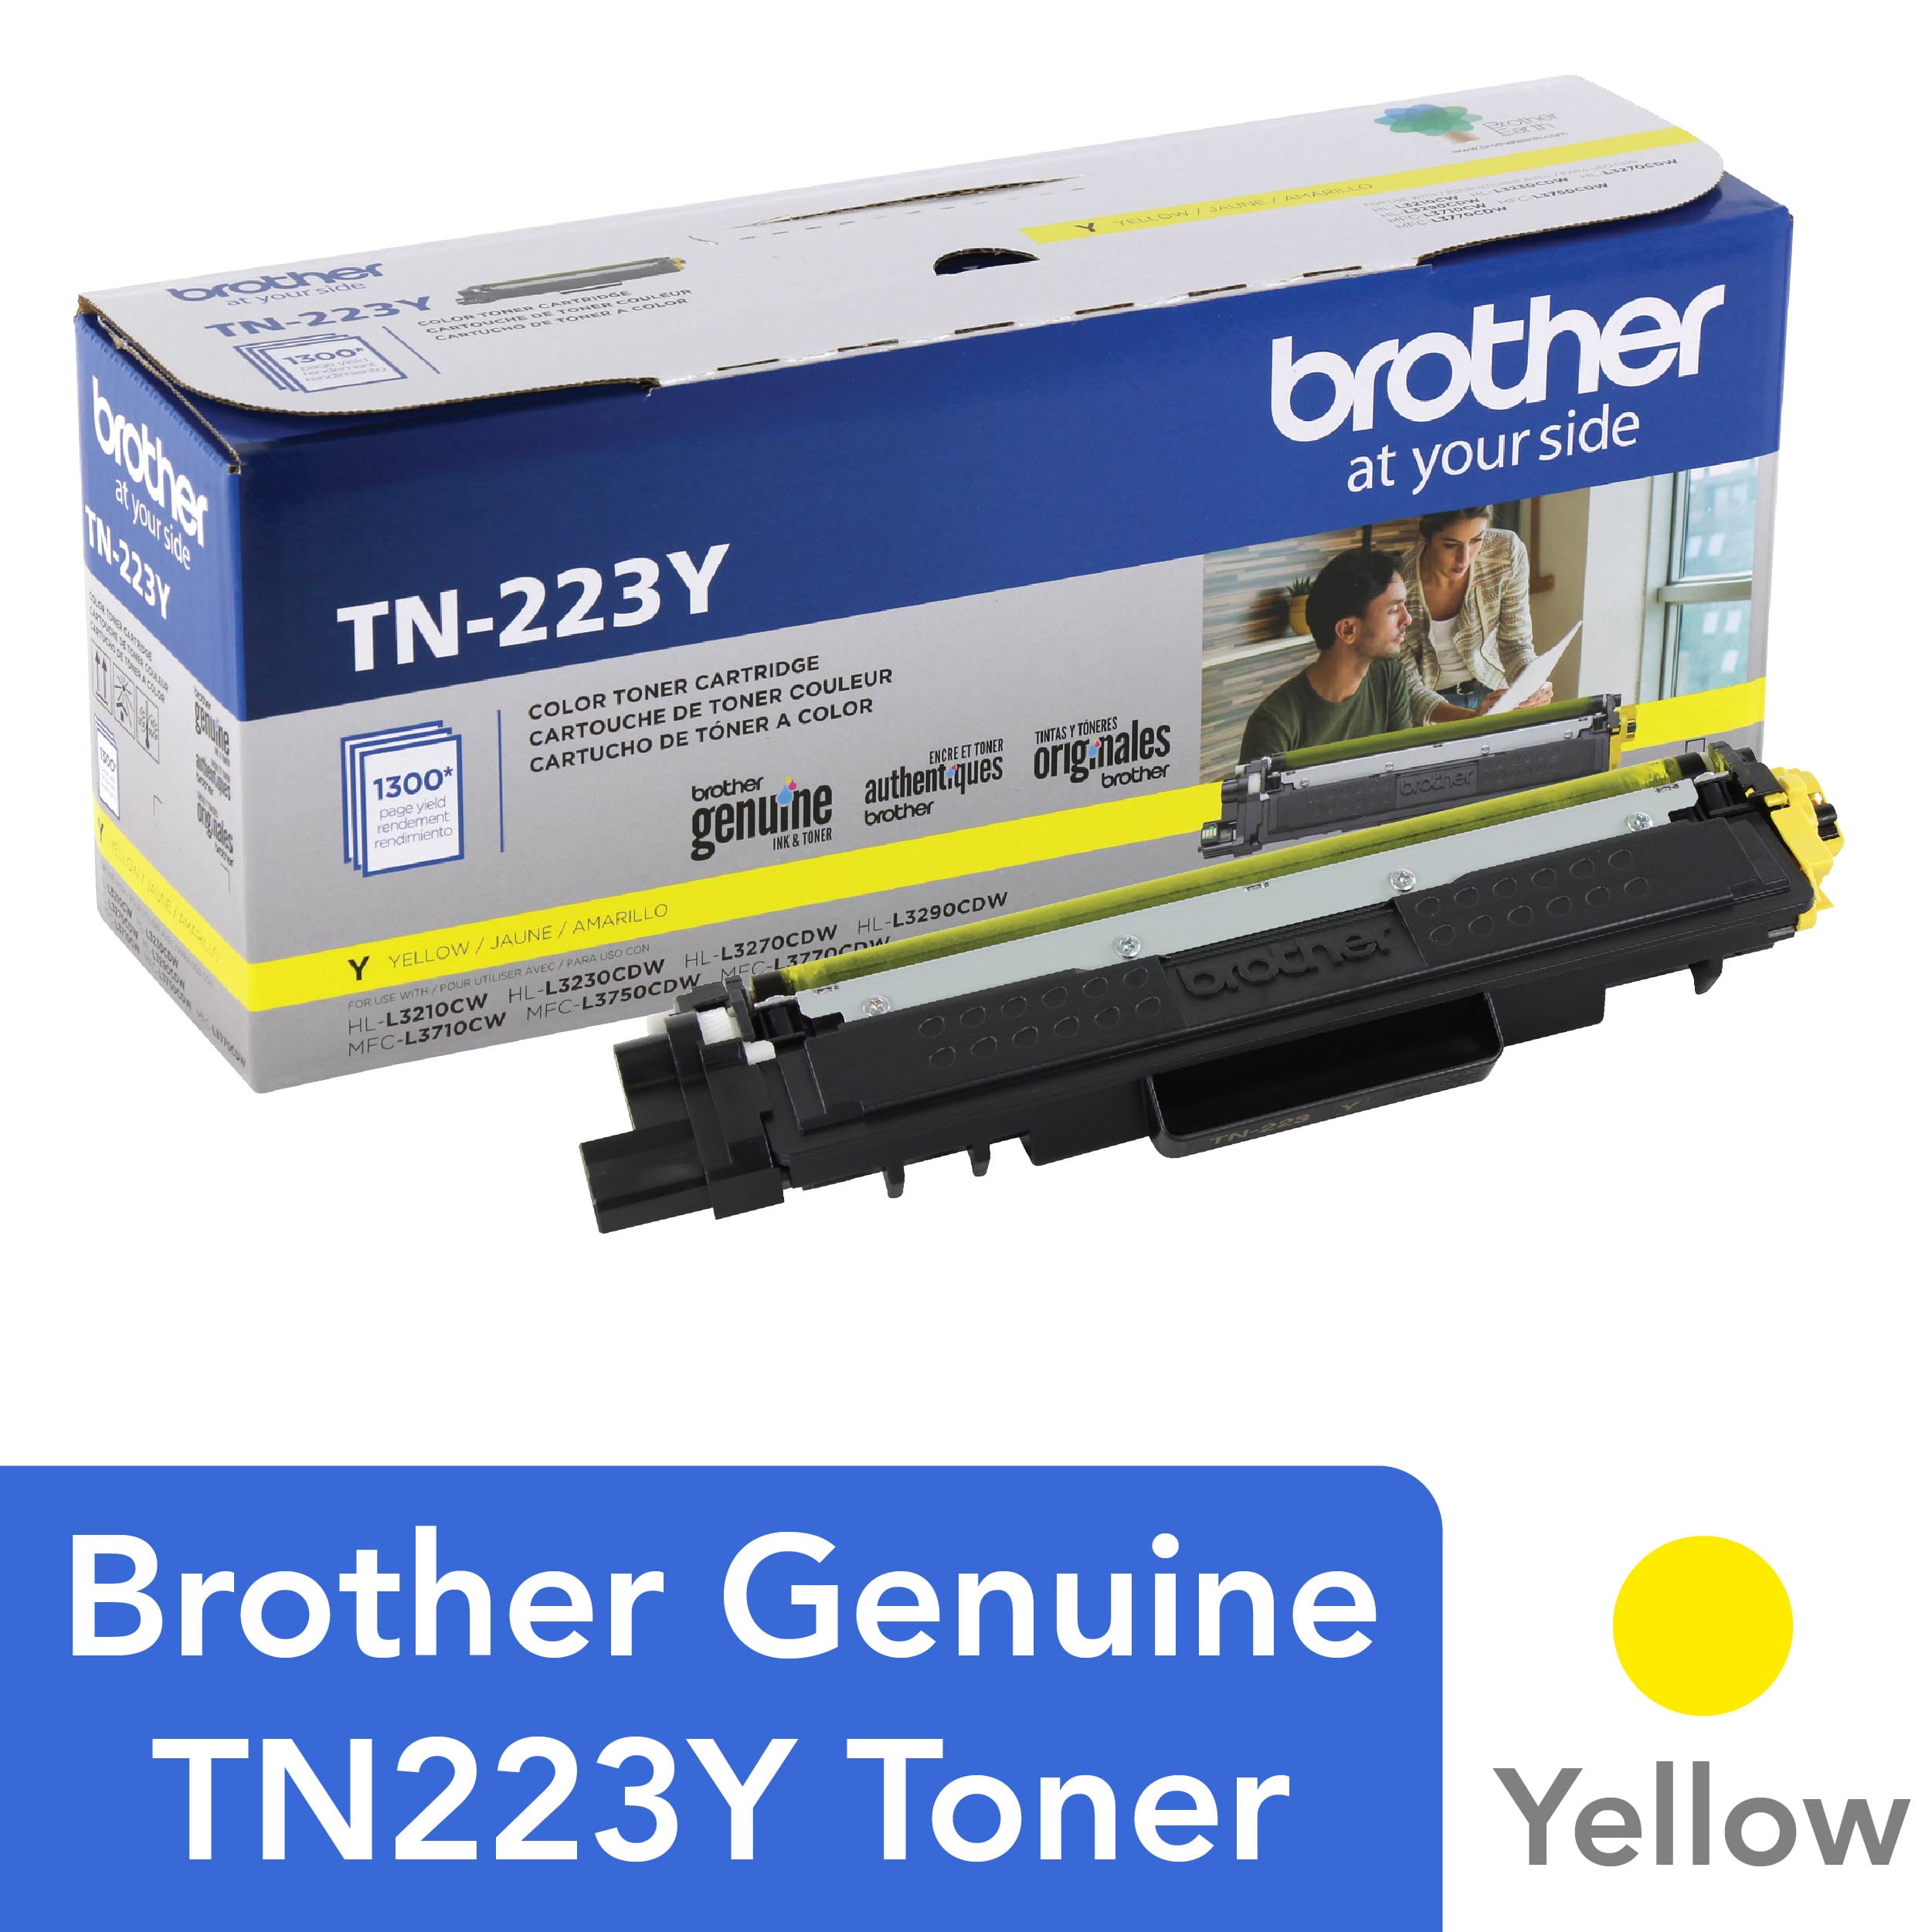 Brother TN223Y Standard-Yield Toner Cartridge Yellow TN223Y - Best Buy